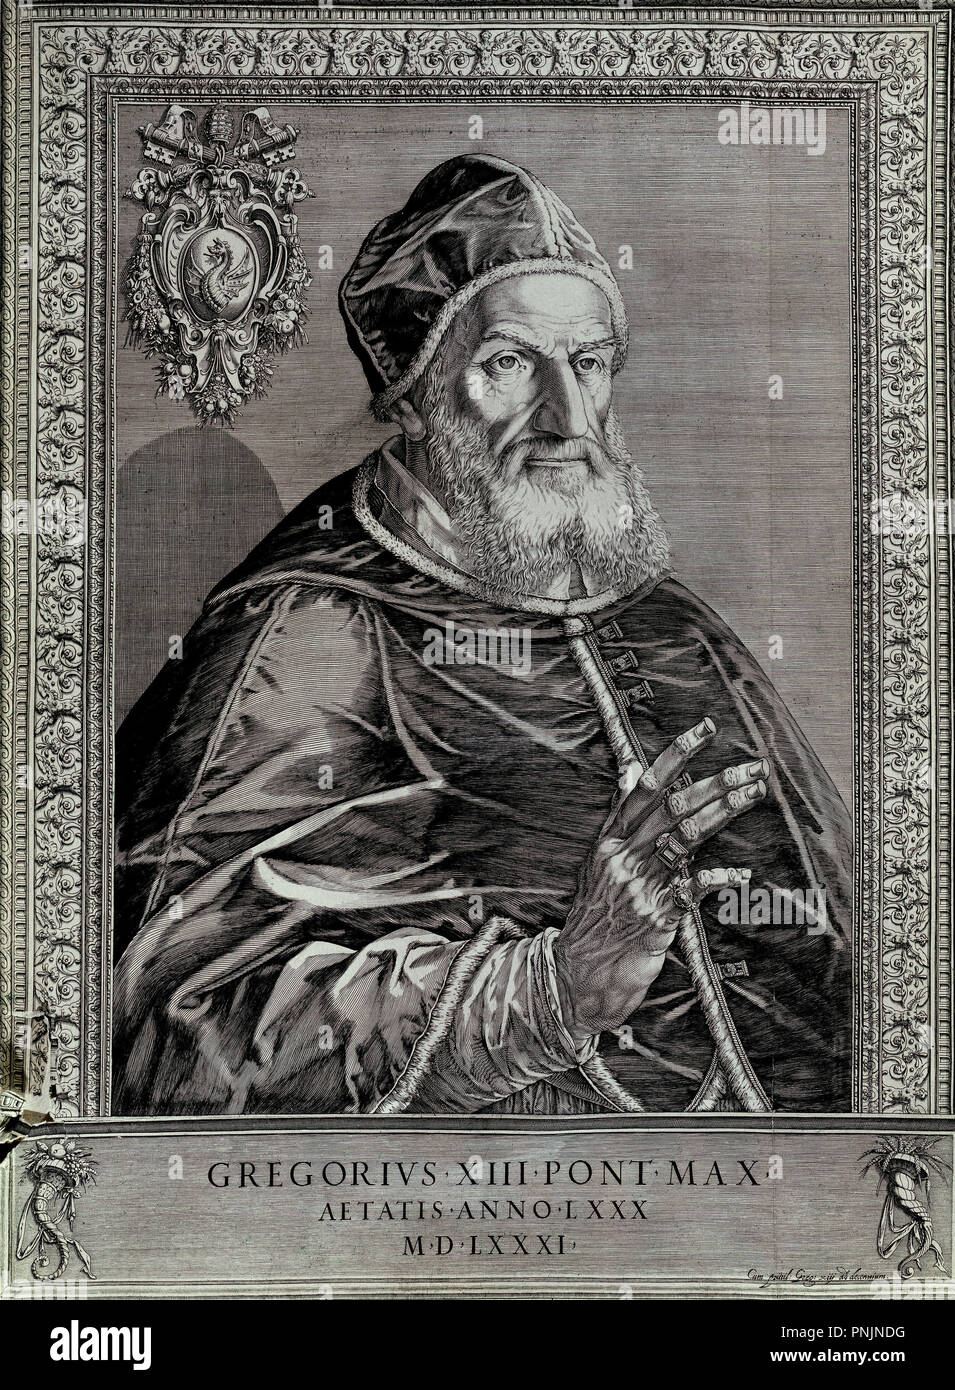 Gregory XIII (Gregorio XIII), pope from 1572 to 1585.. Madrid, San Lorenzo del Escorial, monastery library. Location: MONASTERIO-BIBLIOTECA-COLECCION. SAN LORENZO DEL ESCORIAL. MADRID. SPAIN. Stock Photo